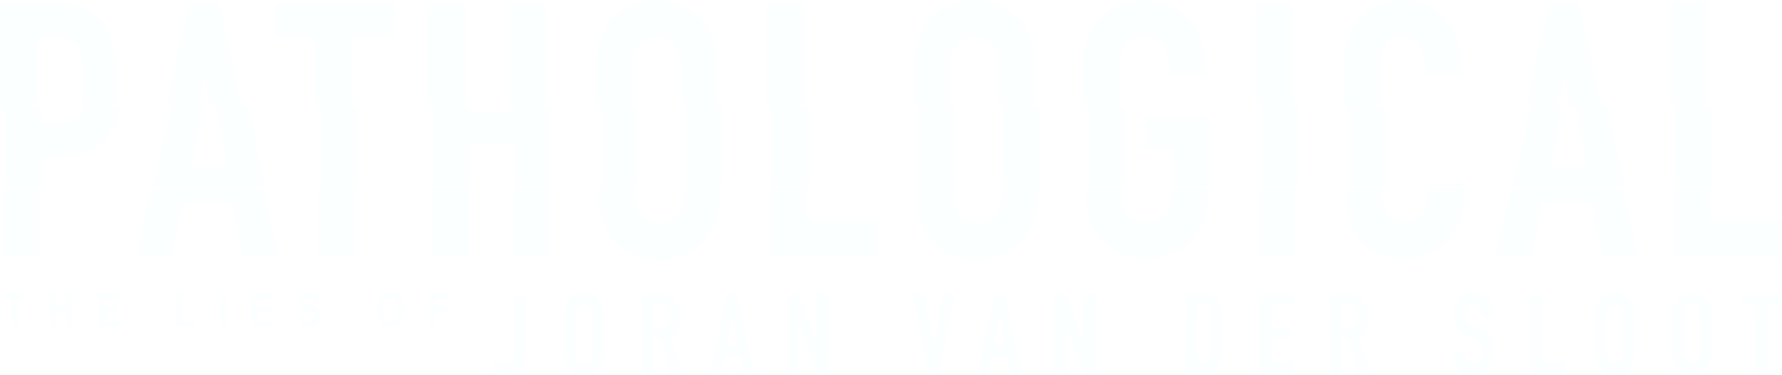 Pathological: The Lies of Joran van der Sloot logo